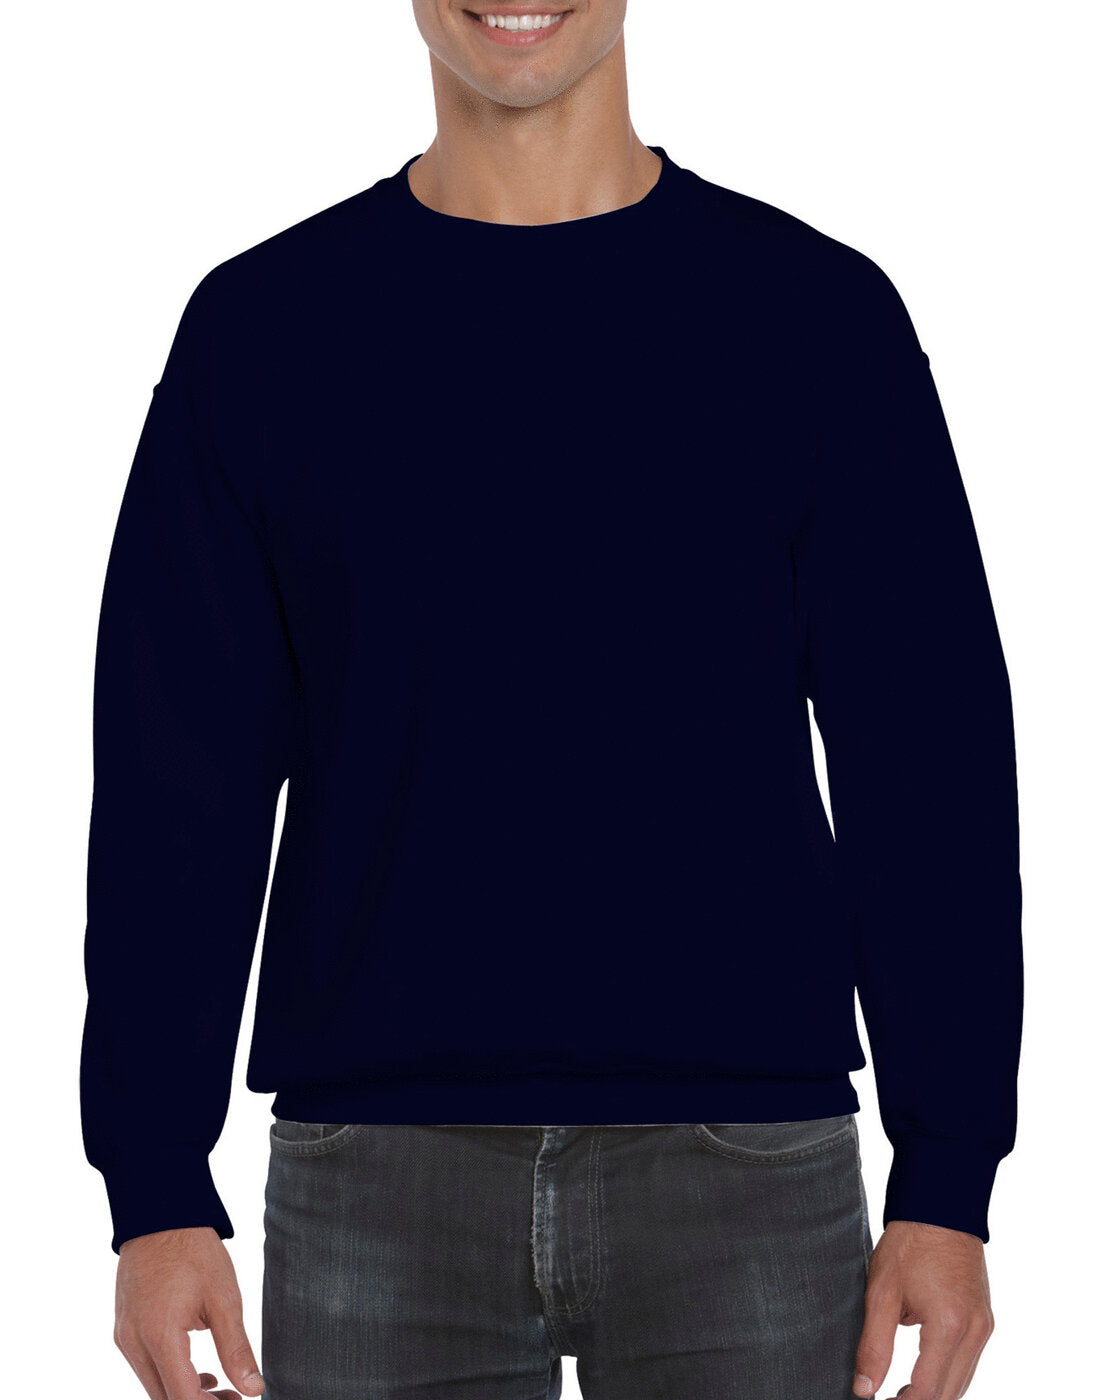 Gildan Dryblend Adult Crew Neck Sweatshirt - Navy